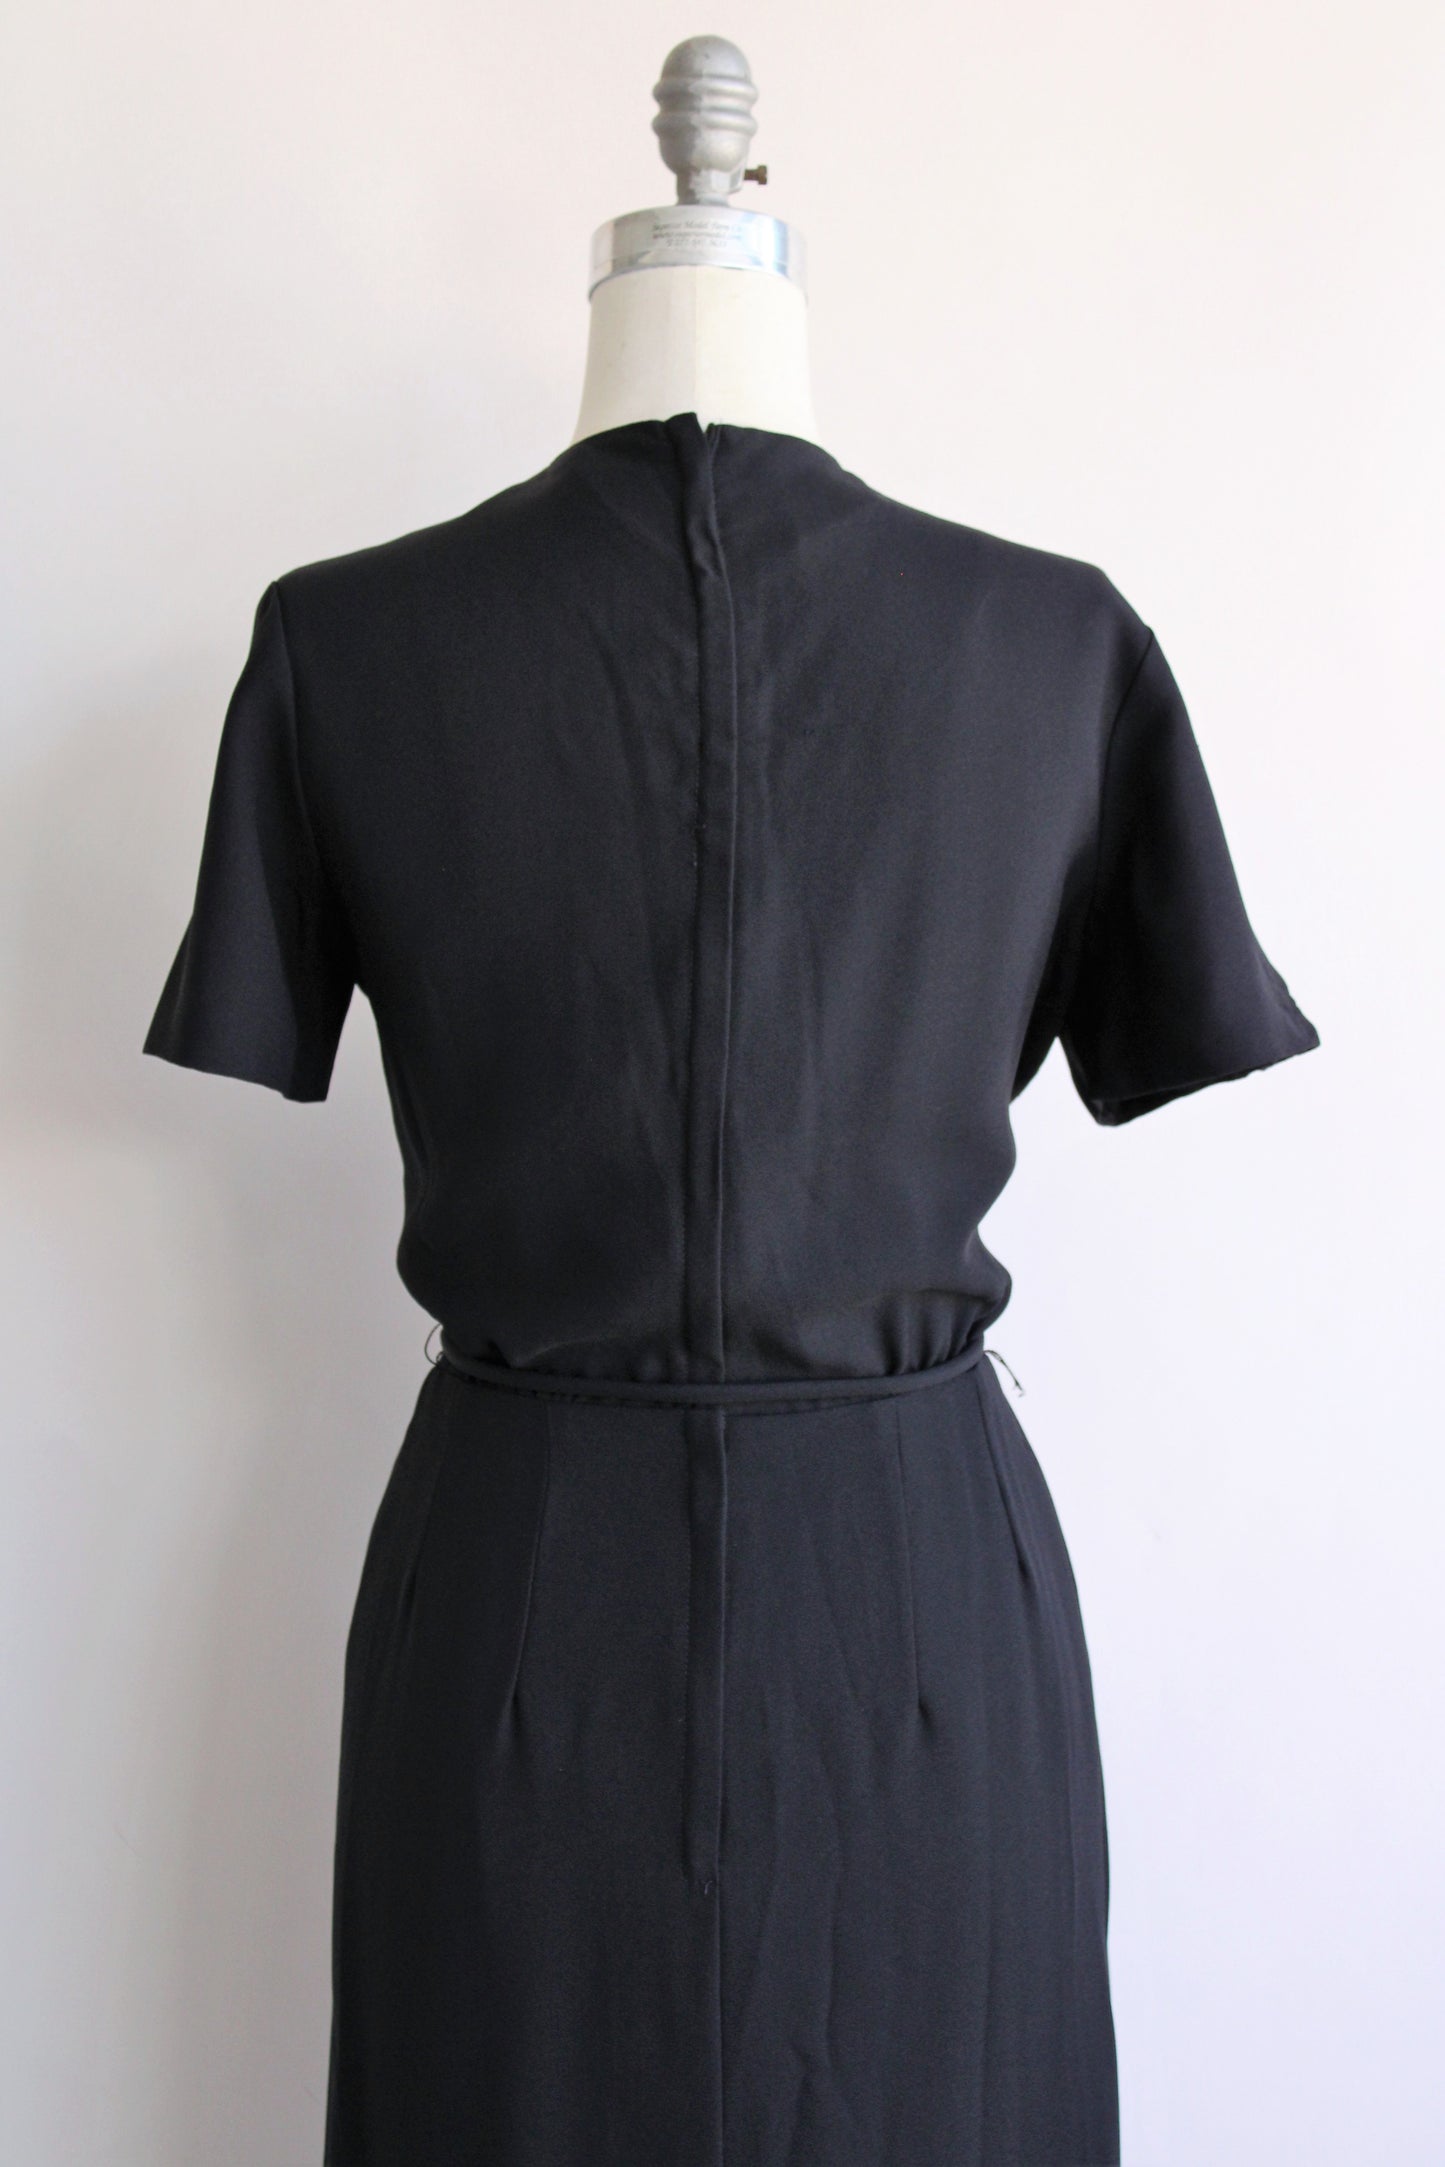 Vintage 1960s Black Dress by Georgee Originals